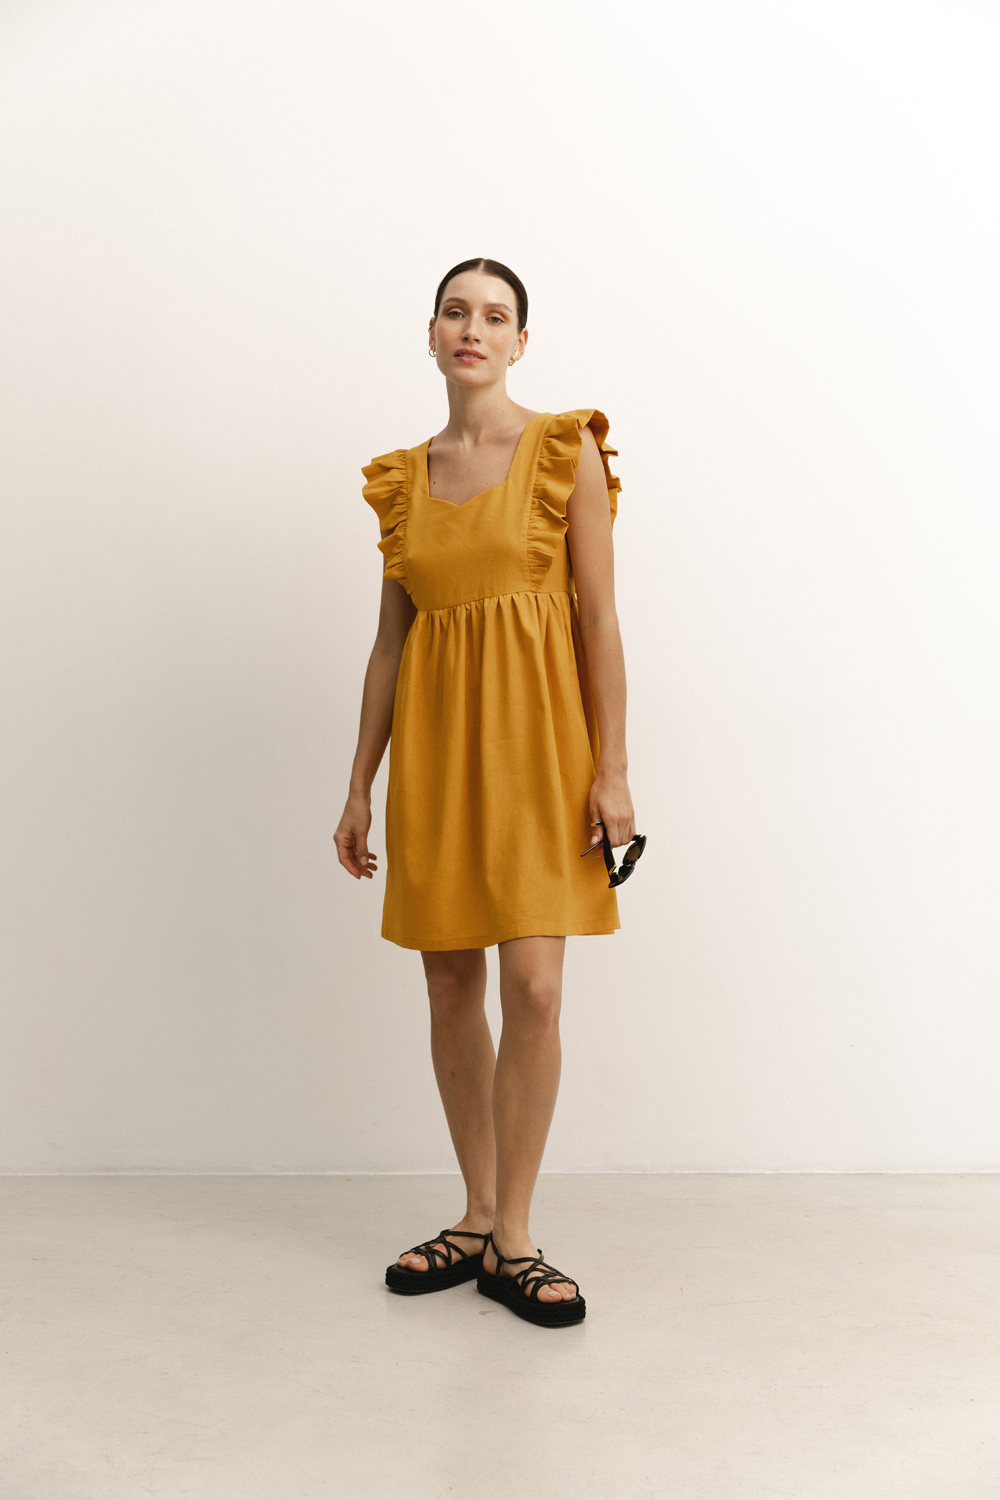 Yellow Sleeveless Dress